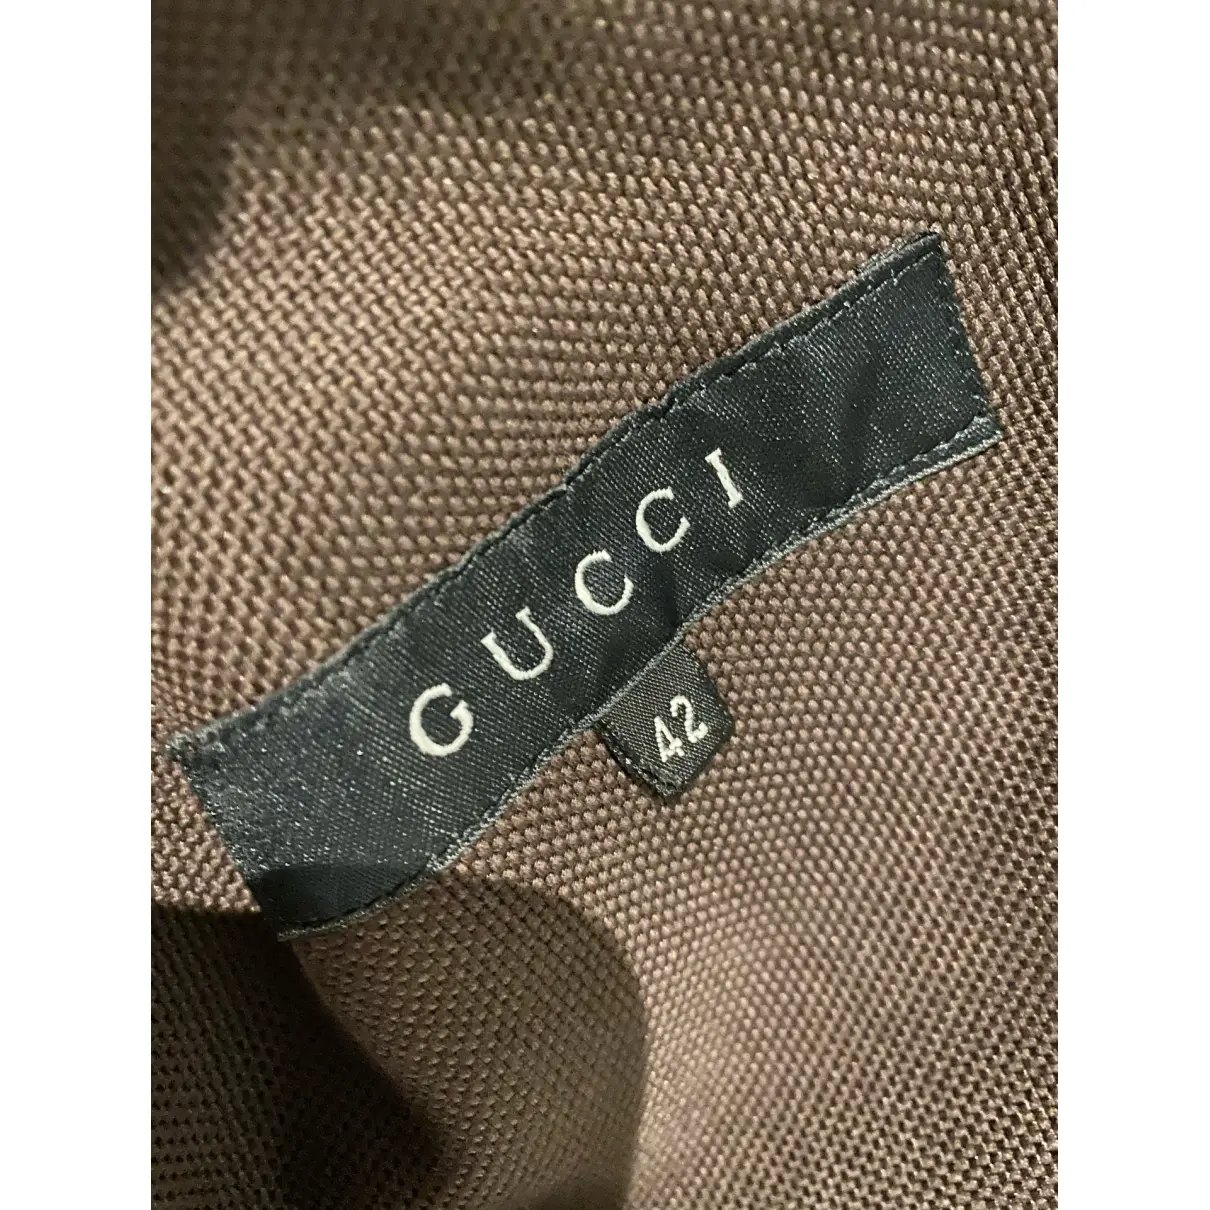 Luxury Gucci Jackets Women - Vintage